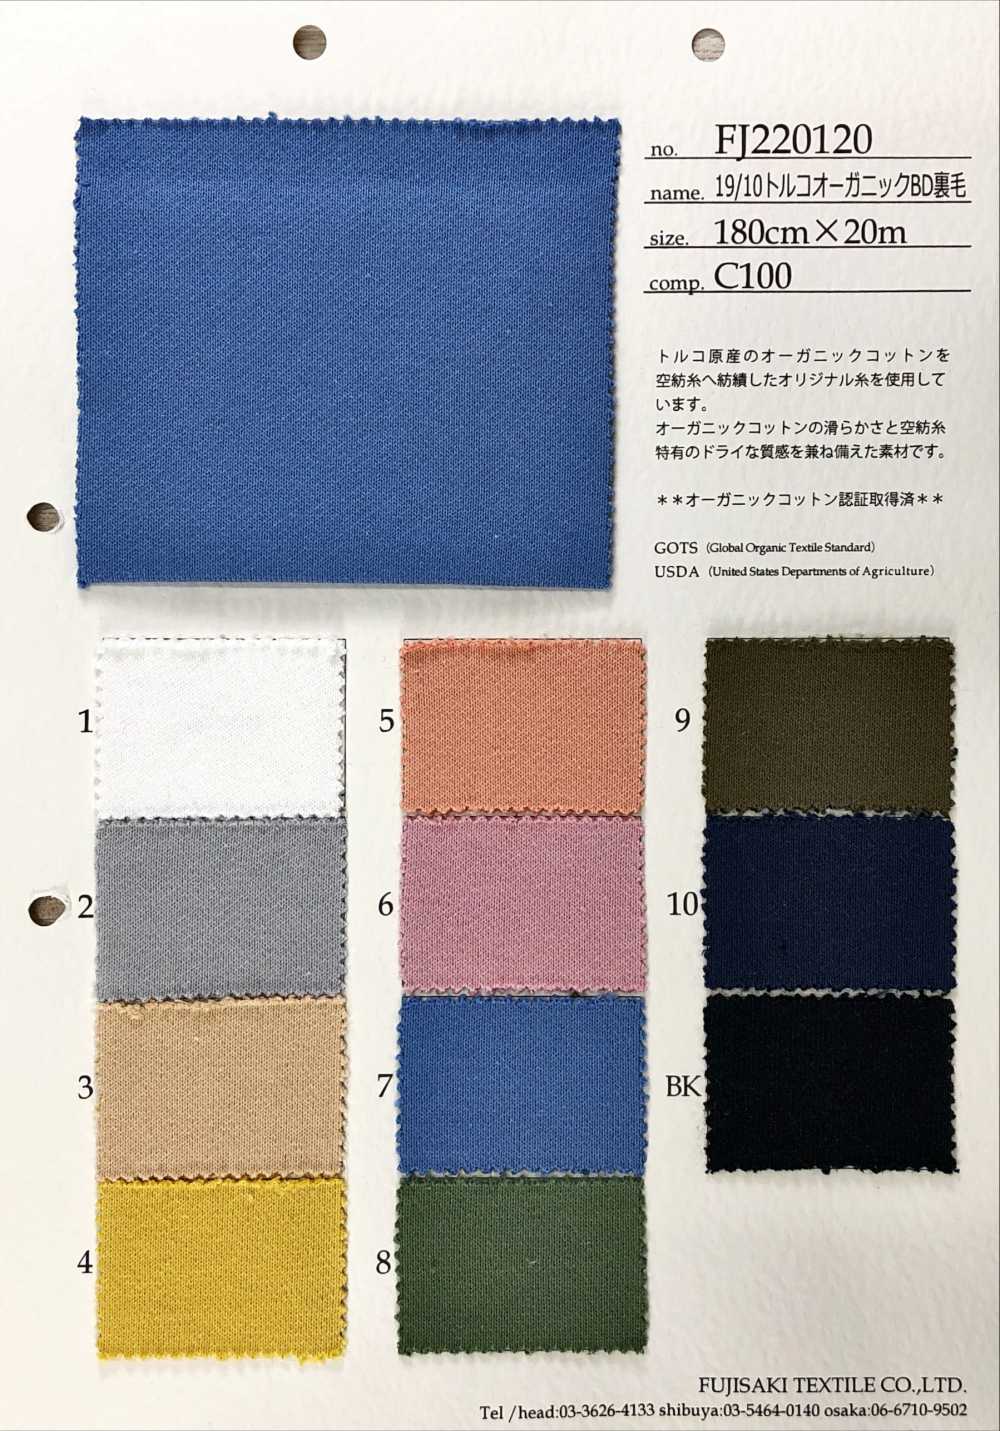 FJ220120 19/10 土耳其有機 BD毛圈布[面料] Fujisaki Textile